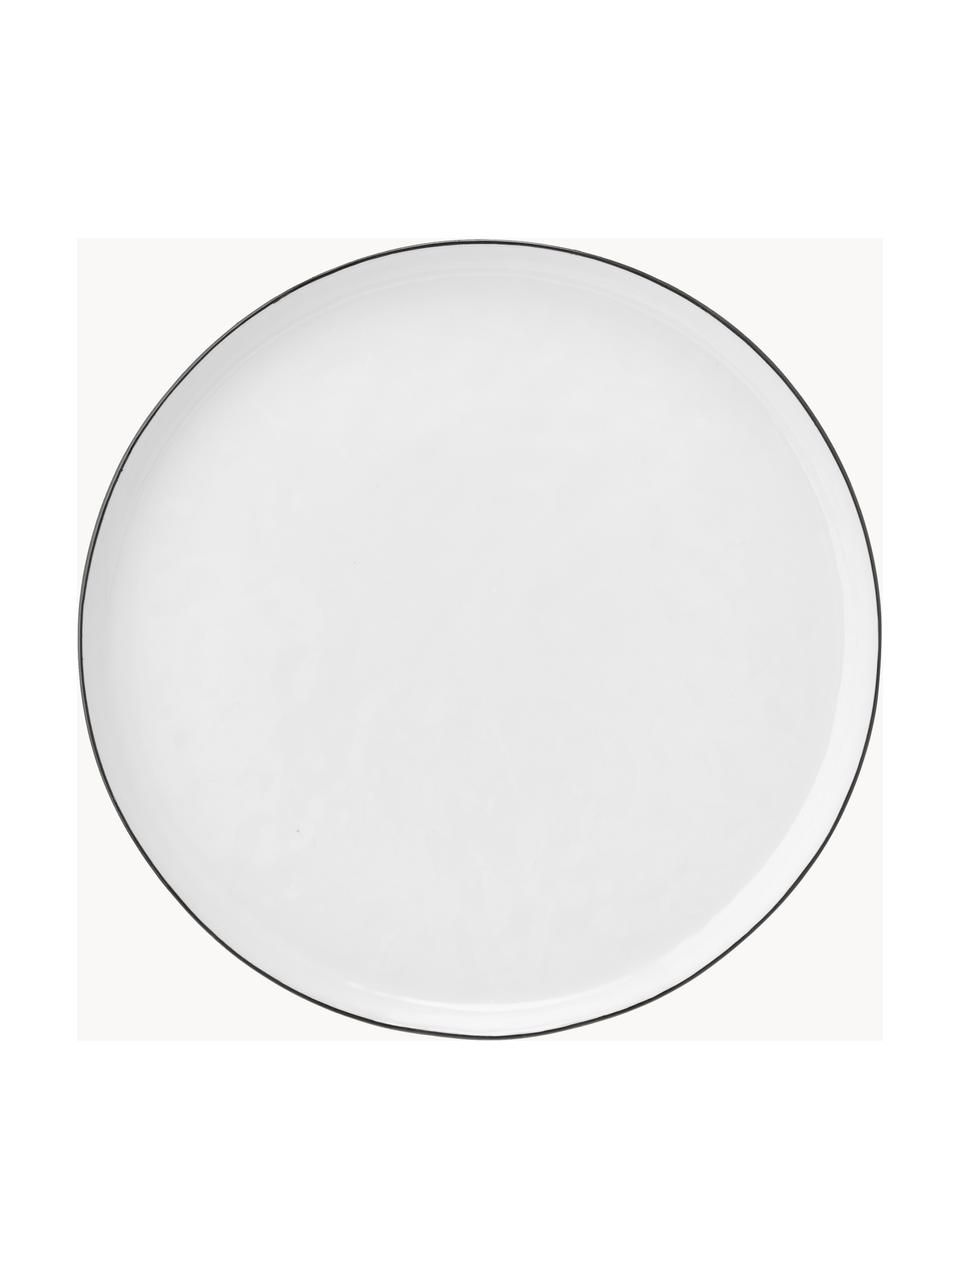 Platos postre artesanal de porcelana Salt, 4 uds., Porcelana, Blanco, Ø 22 cm